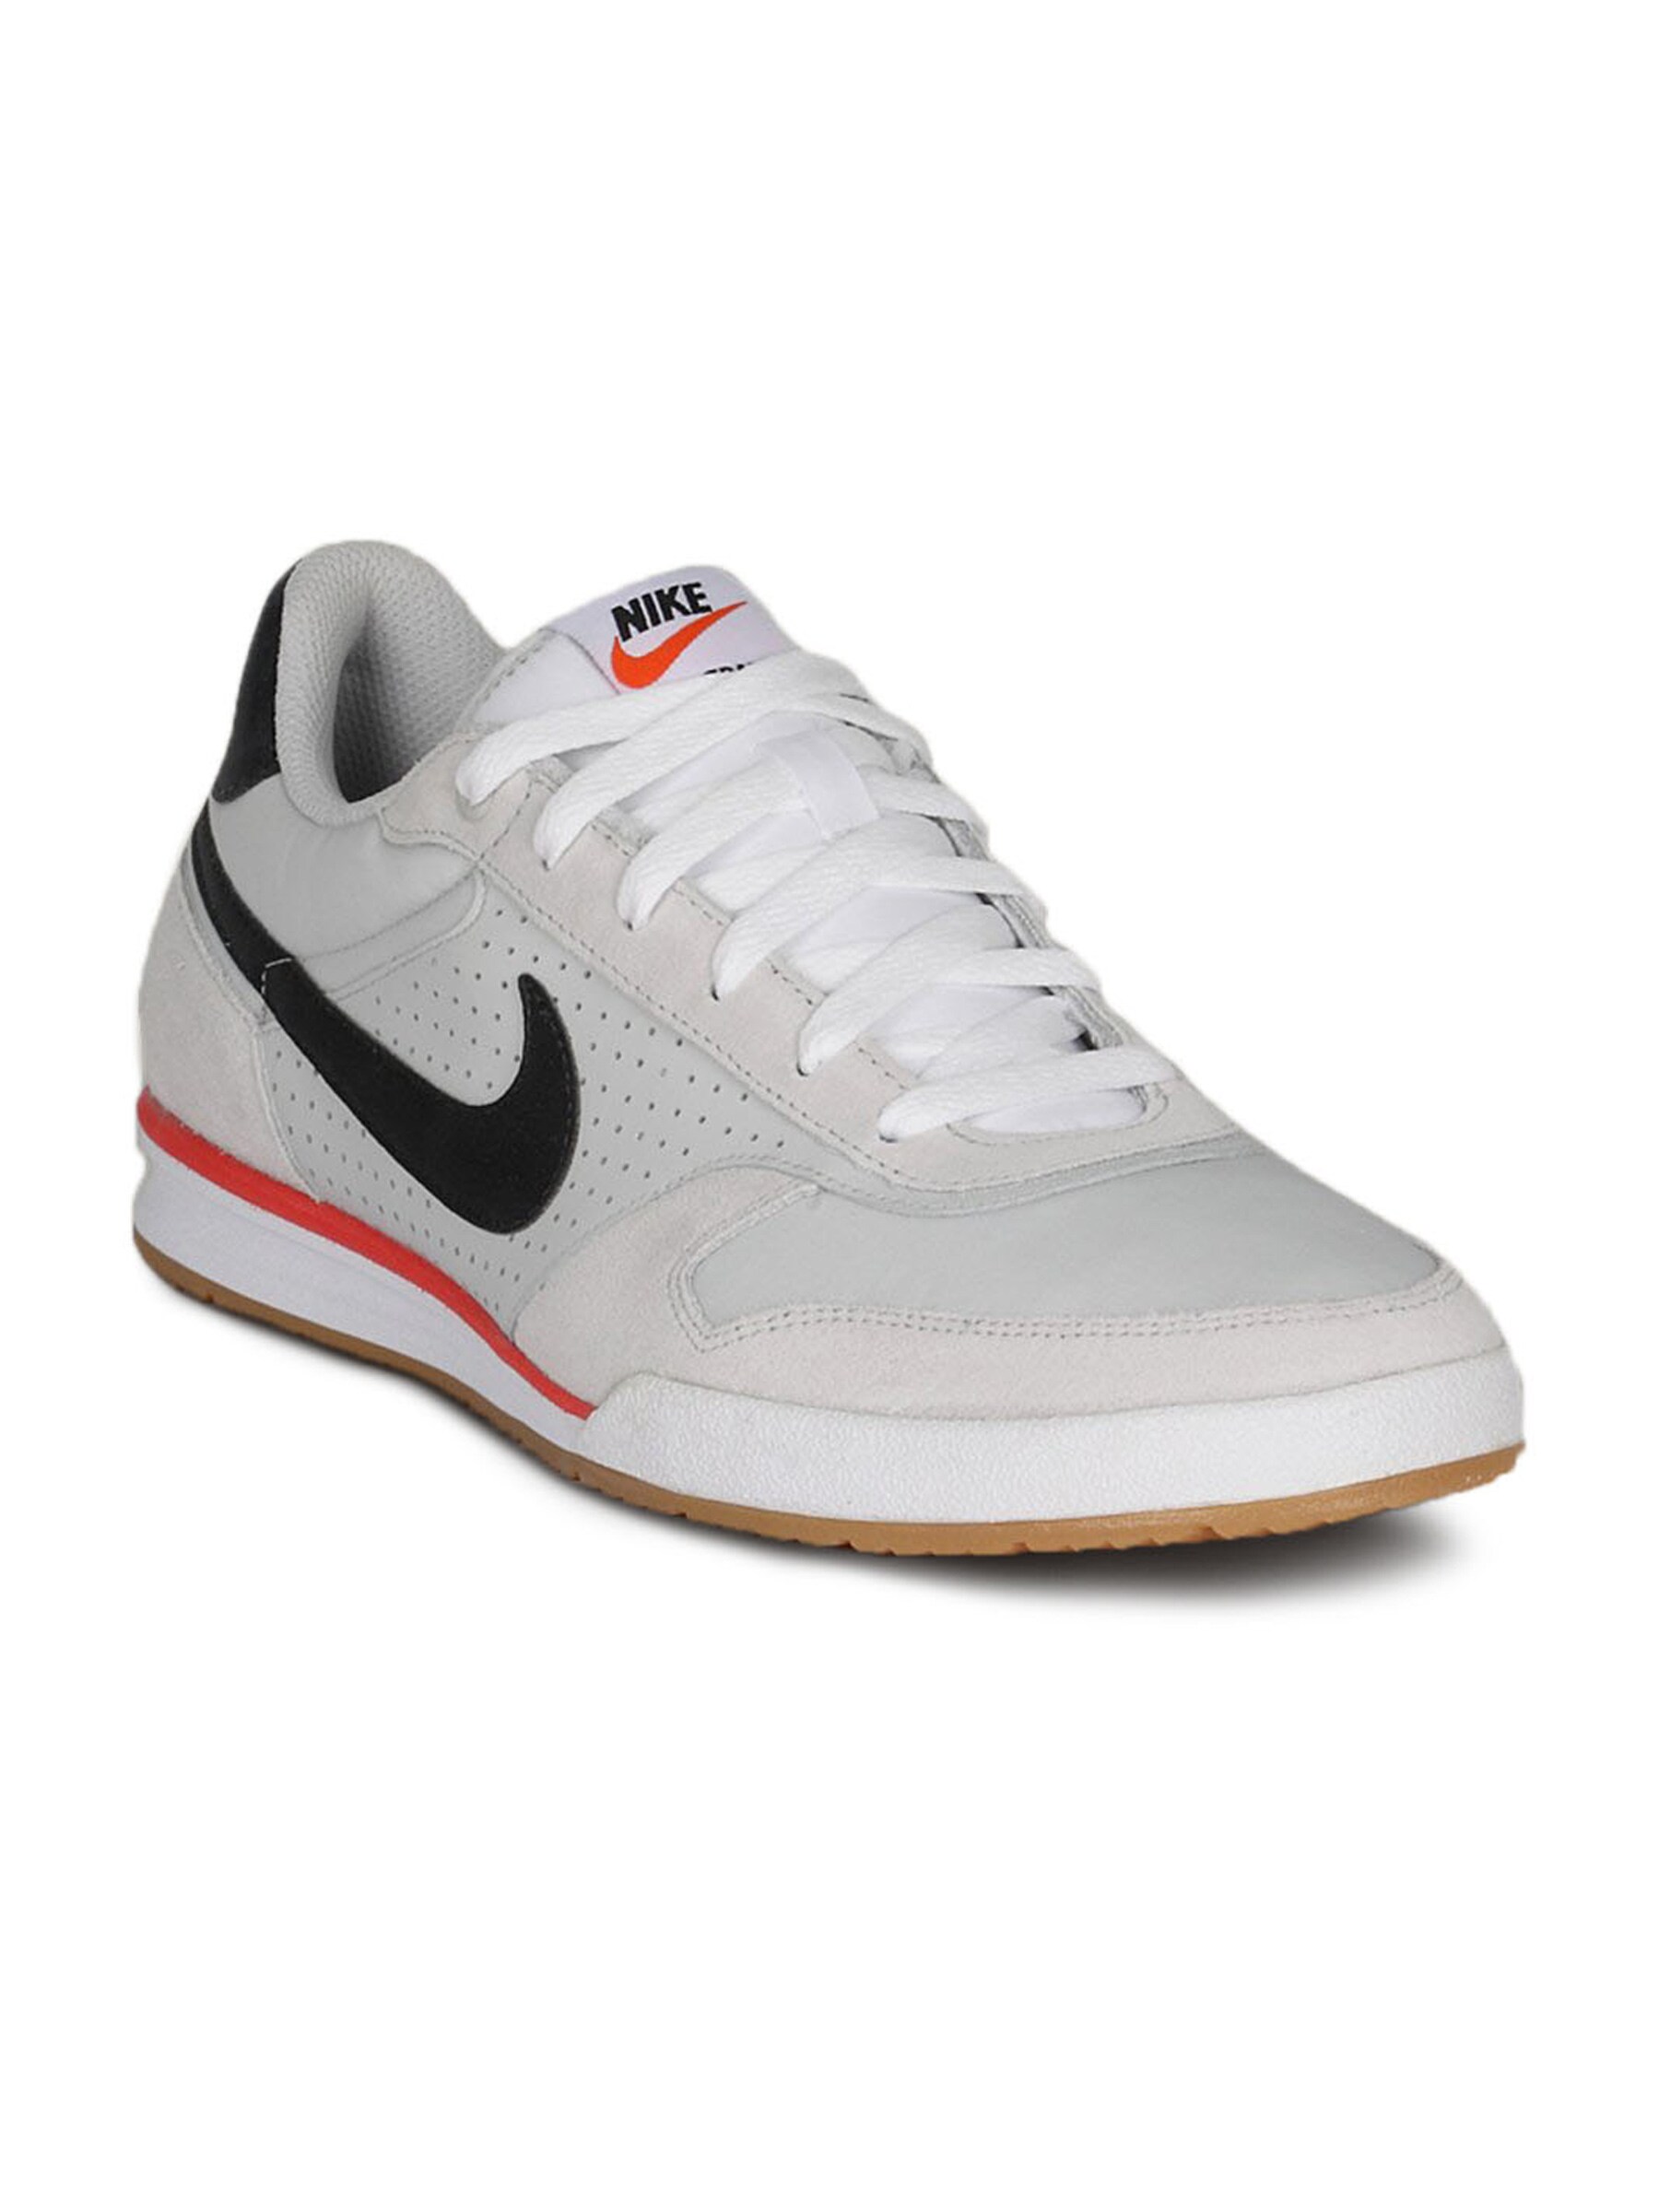 Nike Men's Field Trainer Textile Grey Black White Shoe